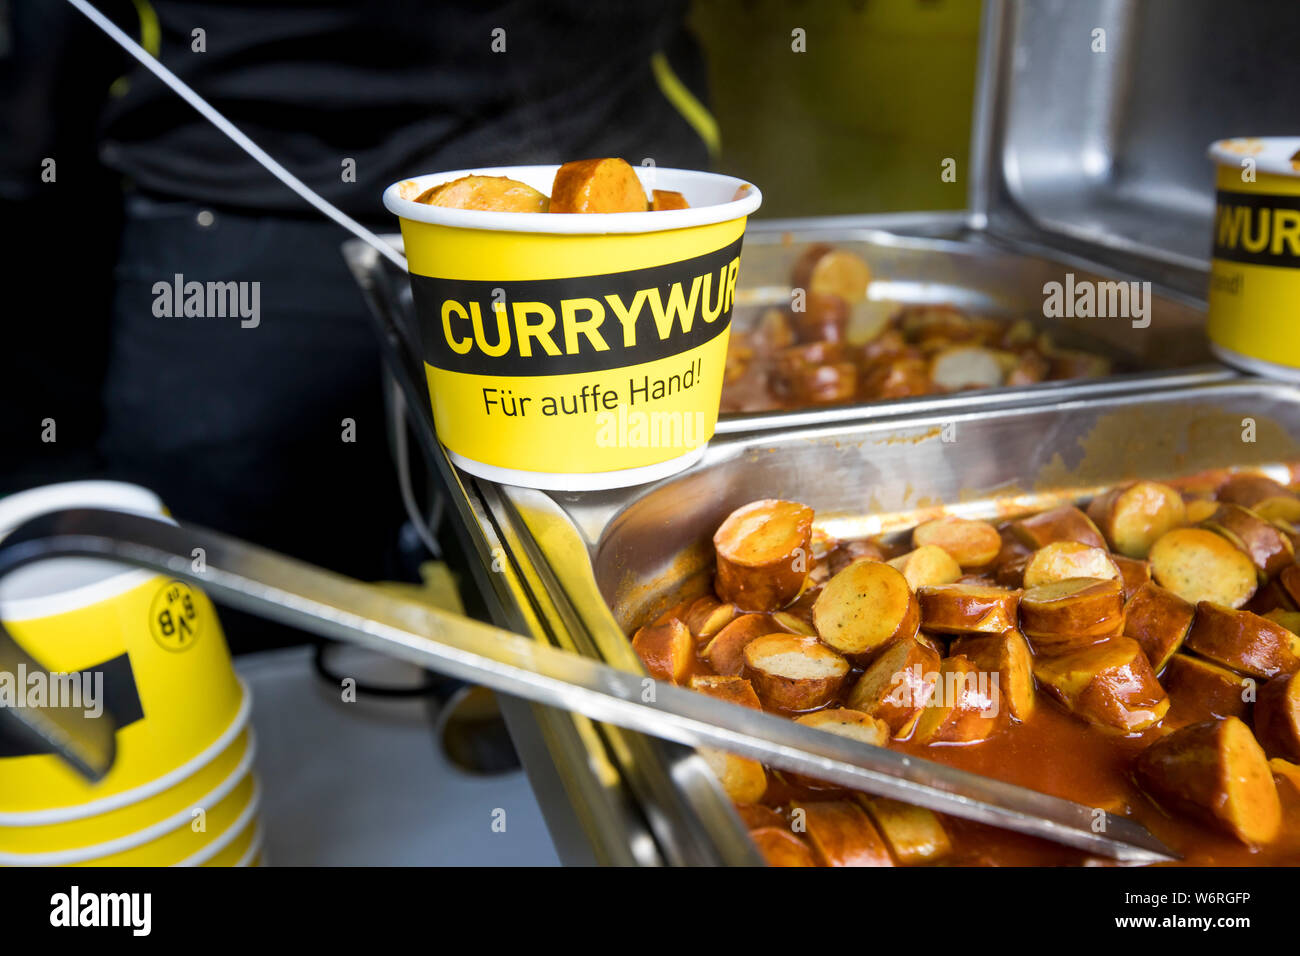 Currywurst, Stadtionwurst, at Signal-Iduna Park, BVB Borussia Dortmund, Westfalen Stadion, Stock Photo